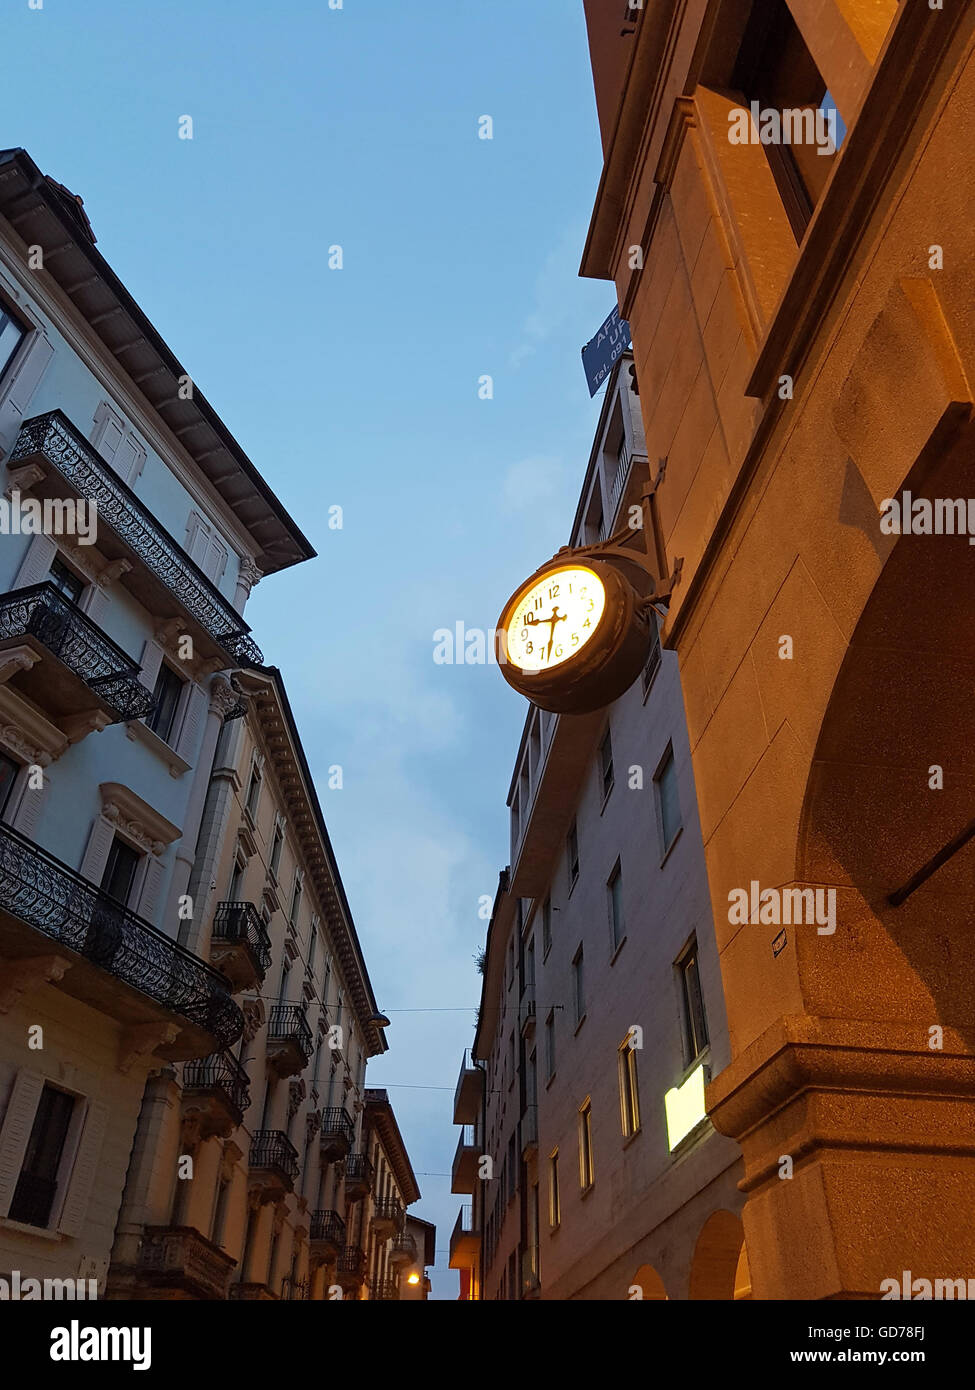 Old european street with illuminated wall clock at night Stock Photo